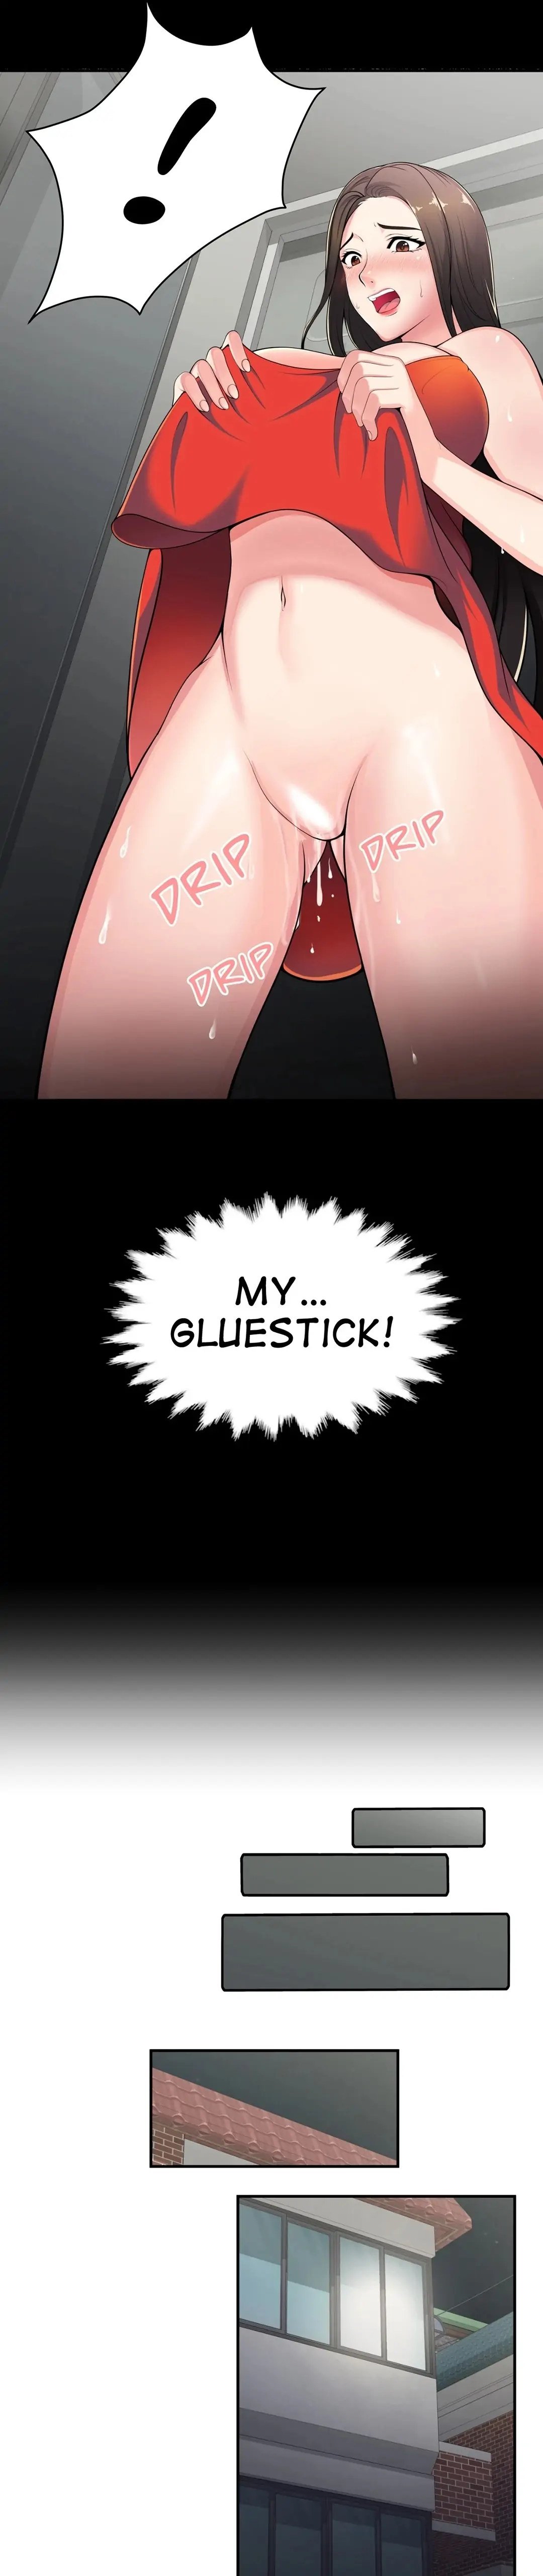 gluestick-girl-chap-1-14